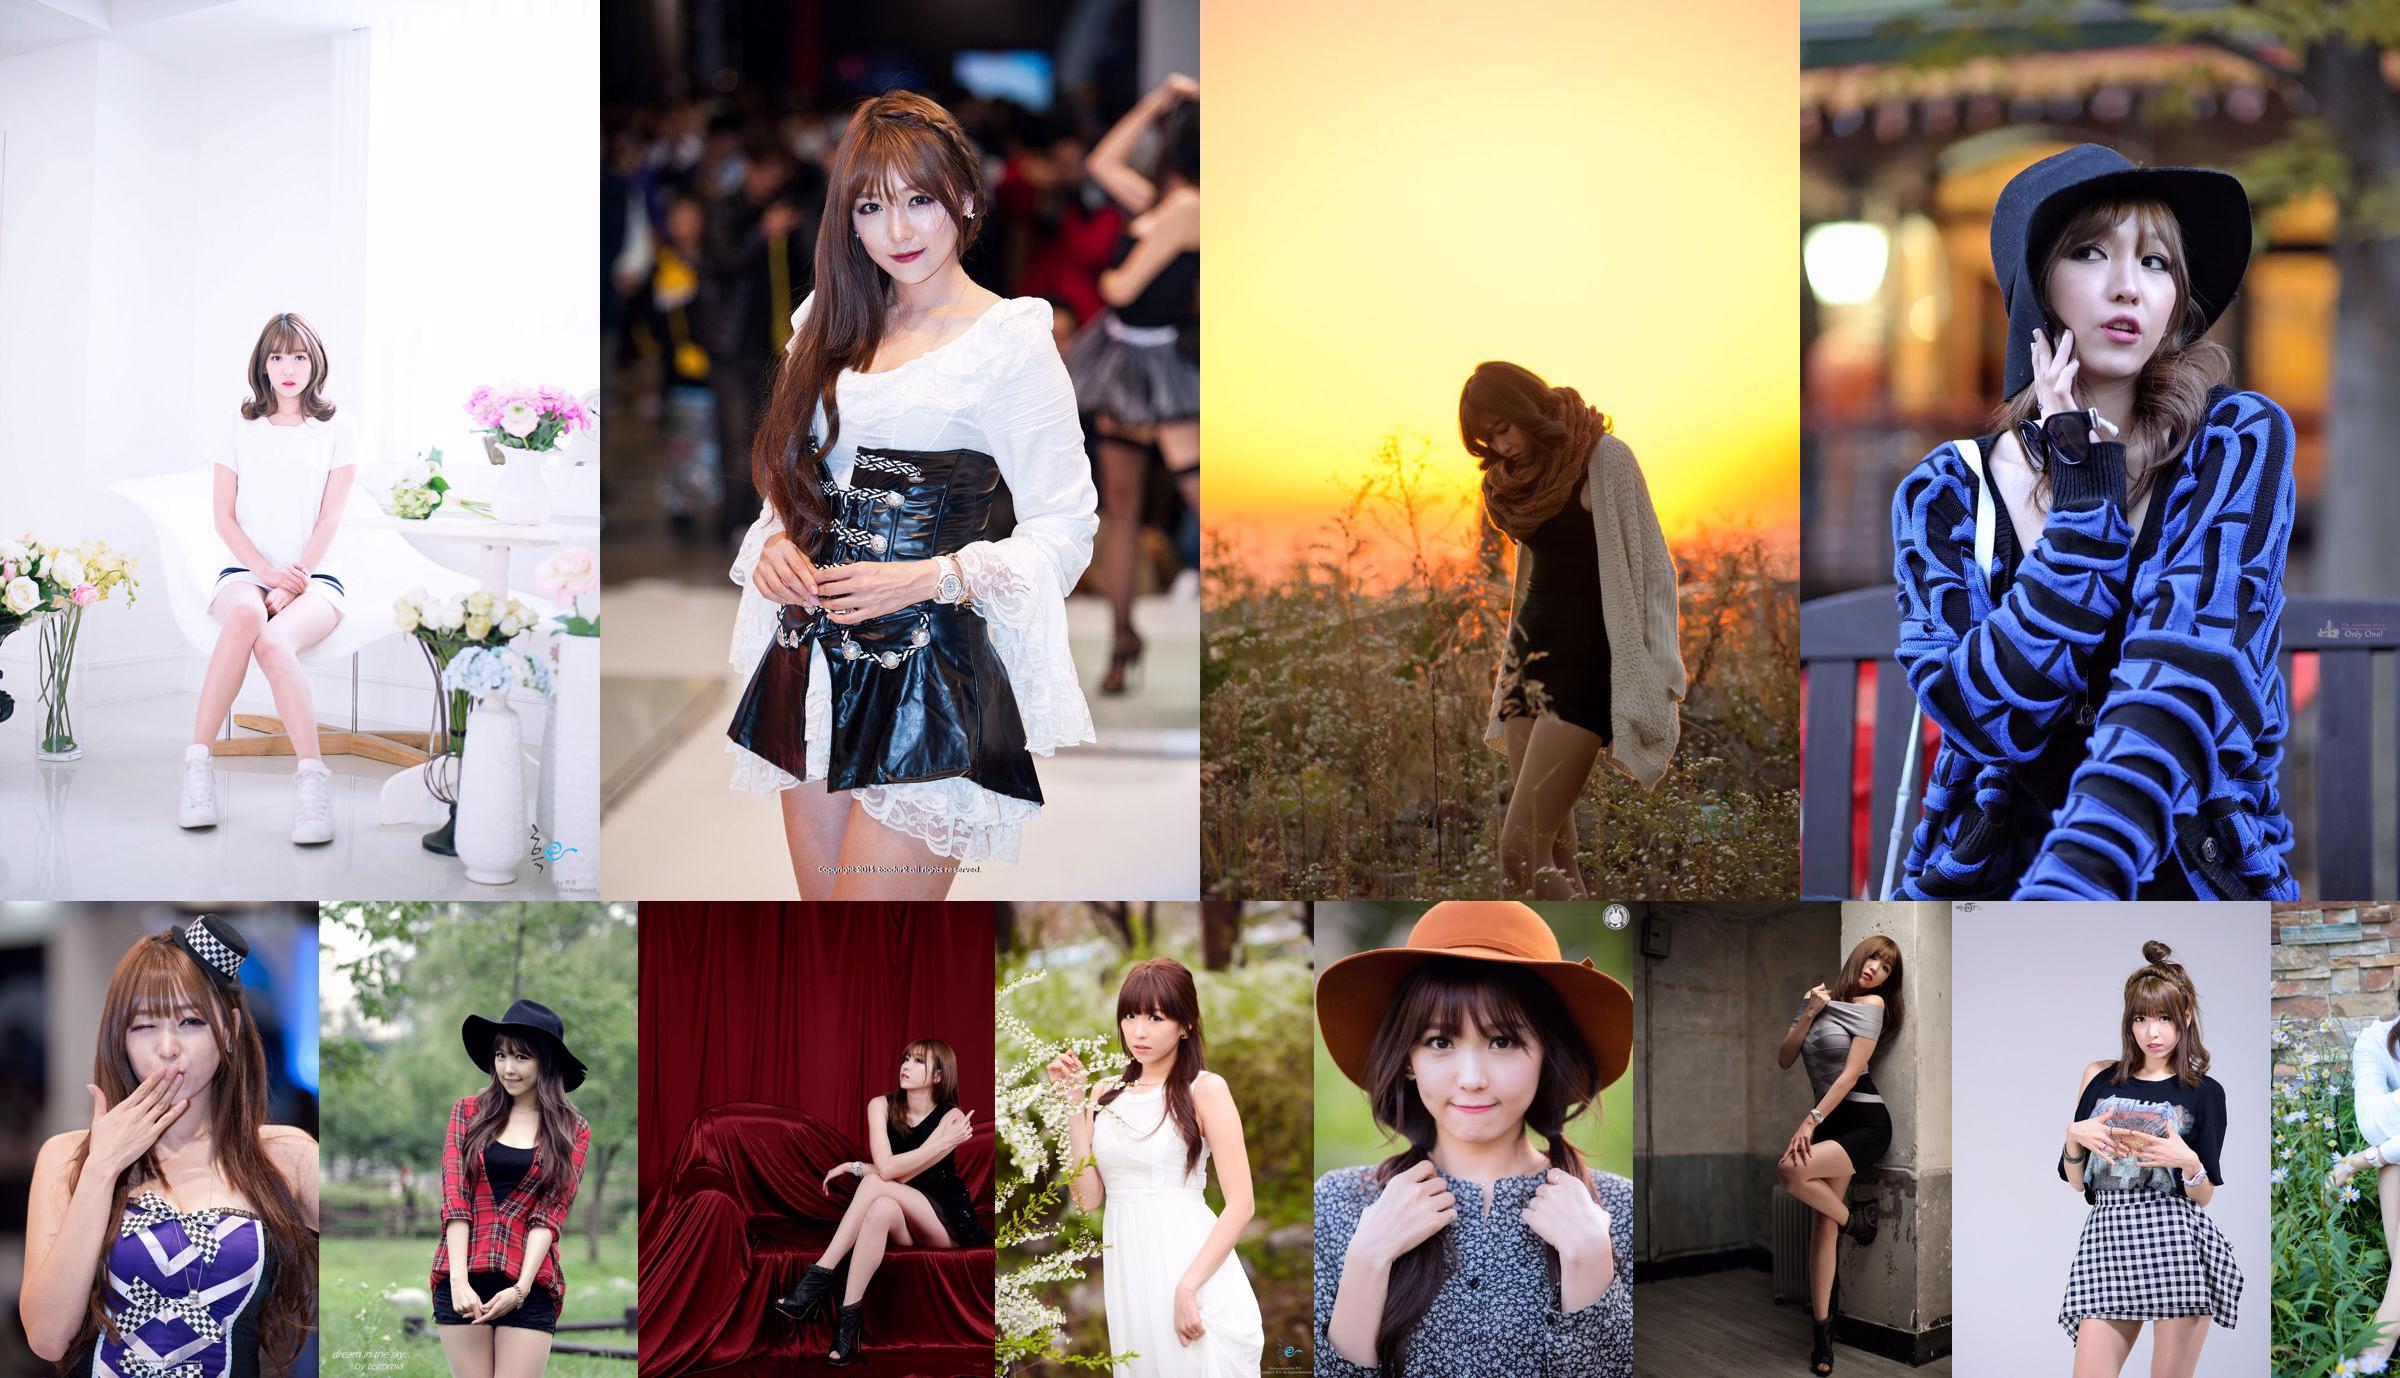 Stand de belleza Lee Eun-hye "ShowGirl Korea International Game Show 2014Gstar" conjunto de fotos No.7039a1 Página 1